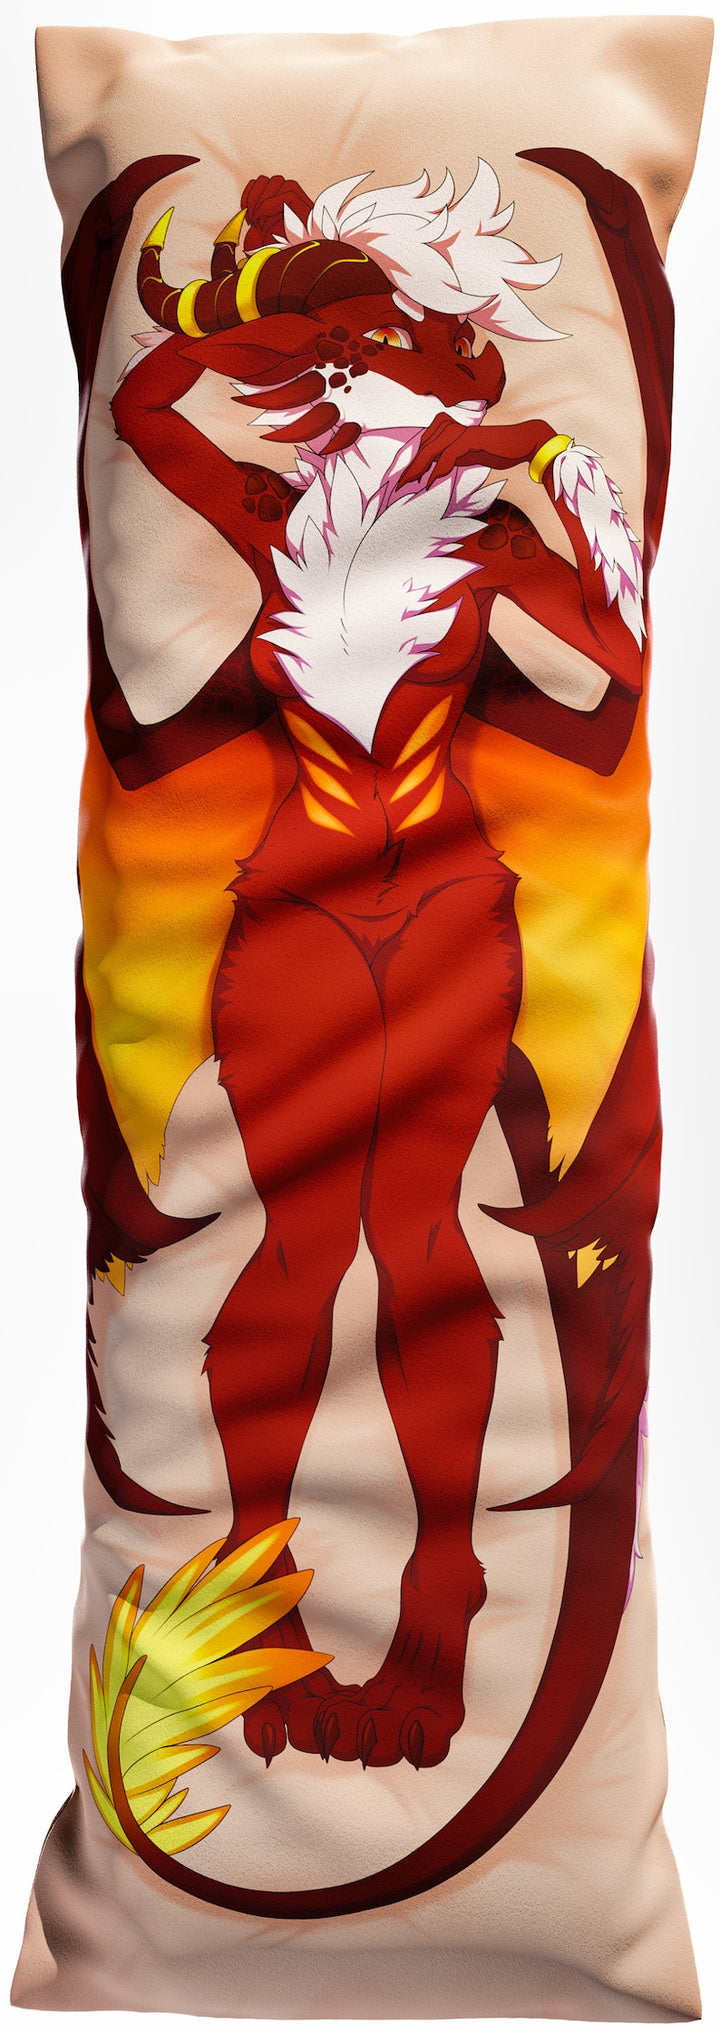 Daki Venmys - Art by Basilisk - The Red Dragon Dakimakura Furry Body Pillow Cover -Art by Basilisk-